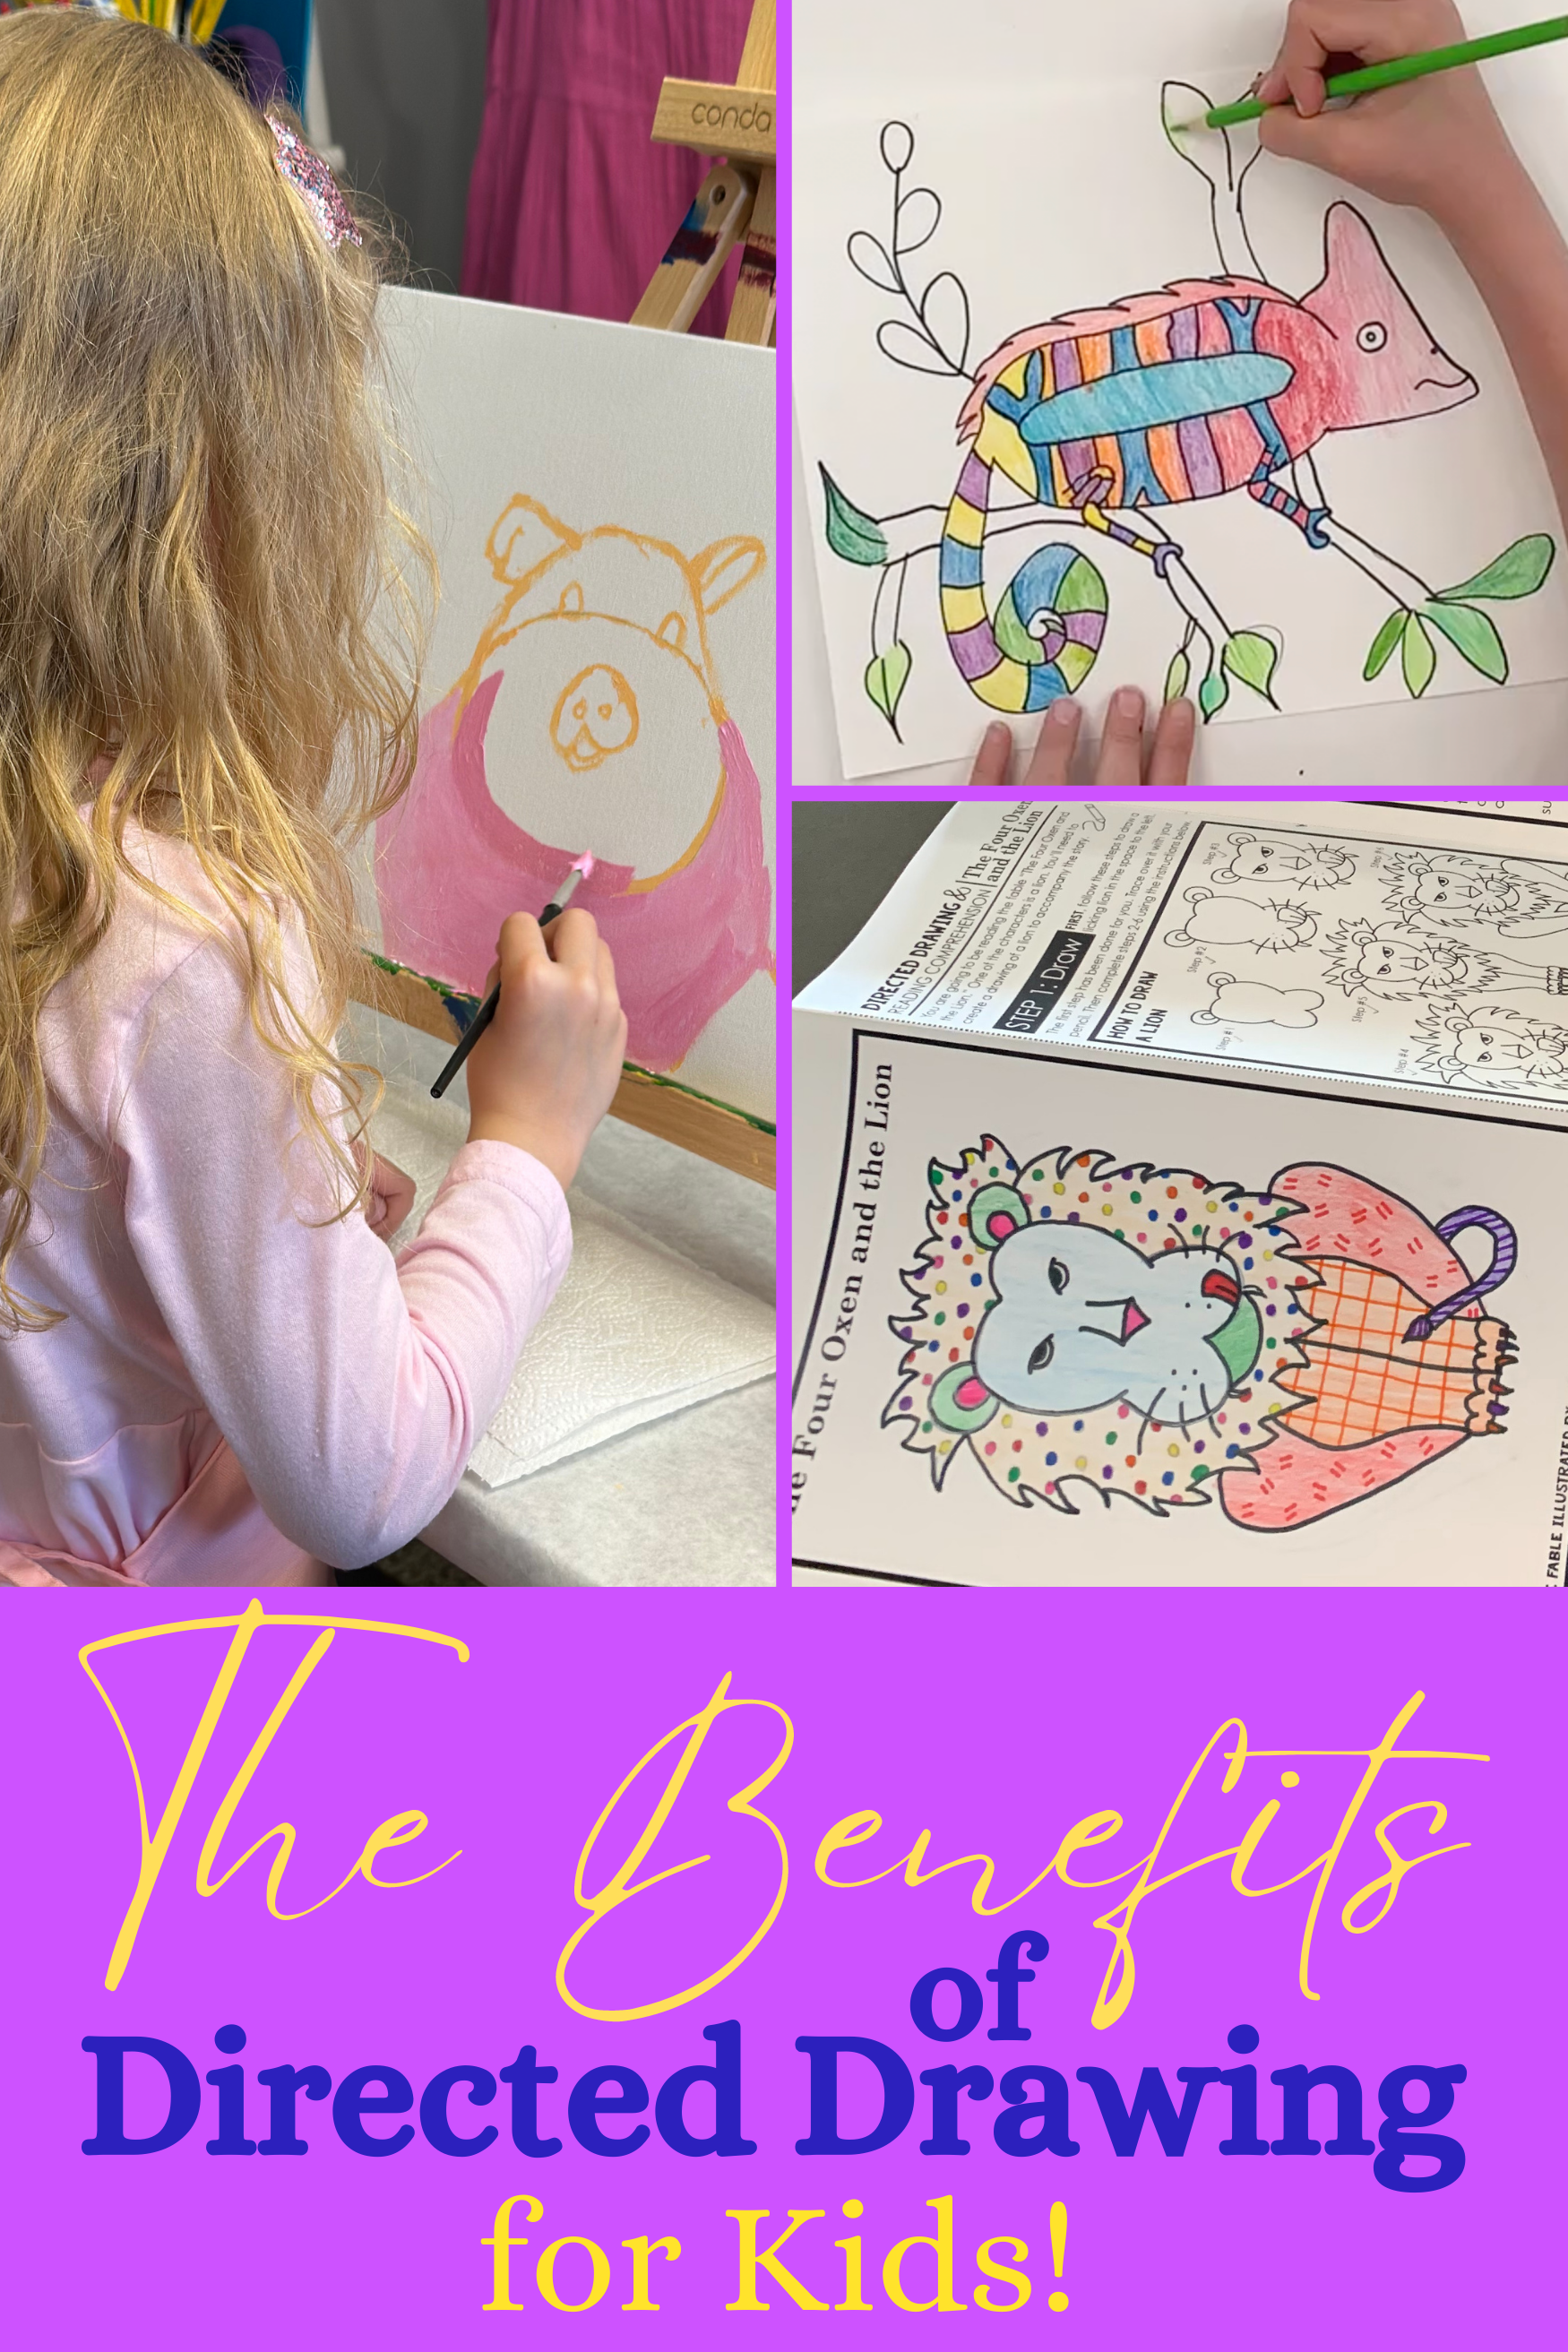 The Mental Health Benefits of Making Art | UVic Student Mental Health Blog